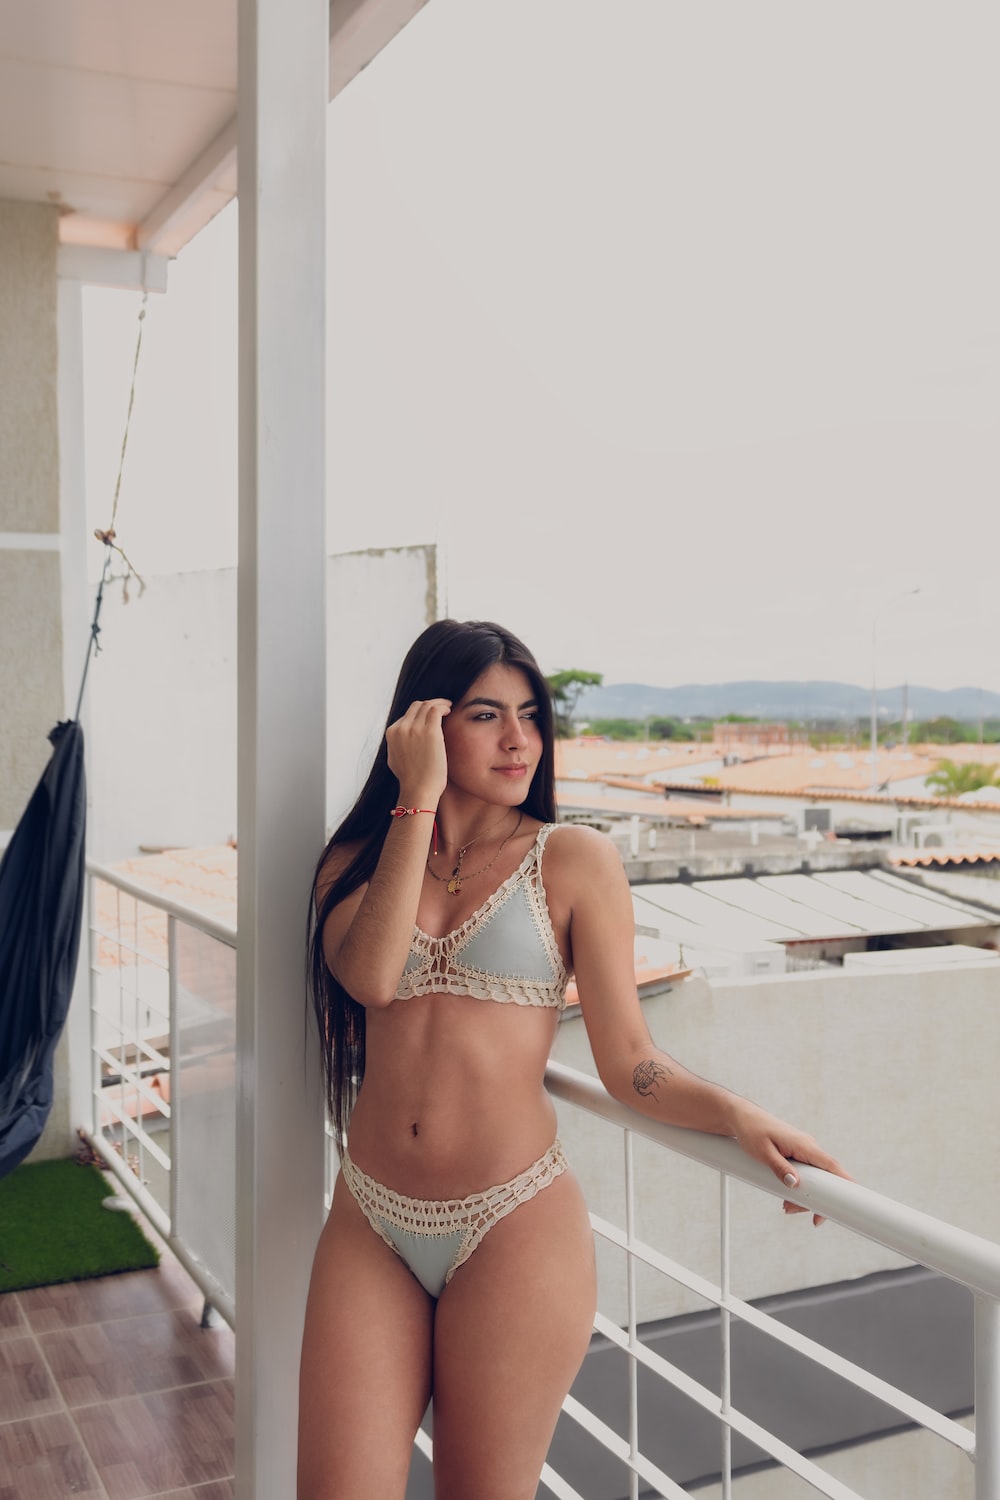 a woman in a bikini standing on a balcony